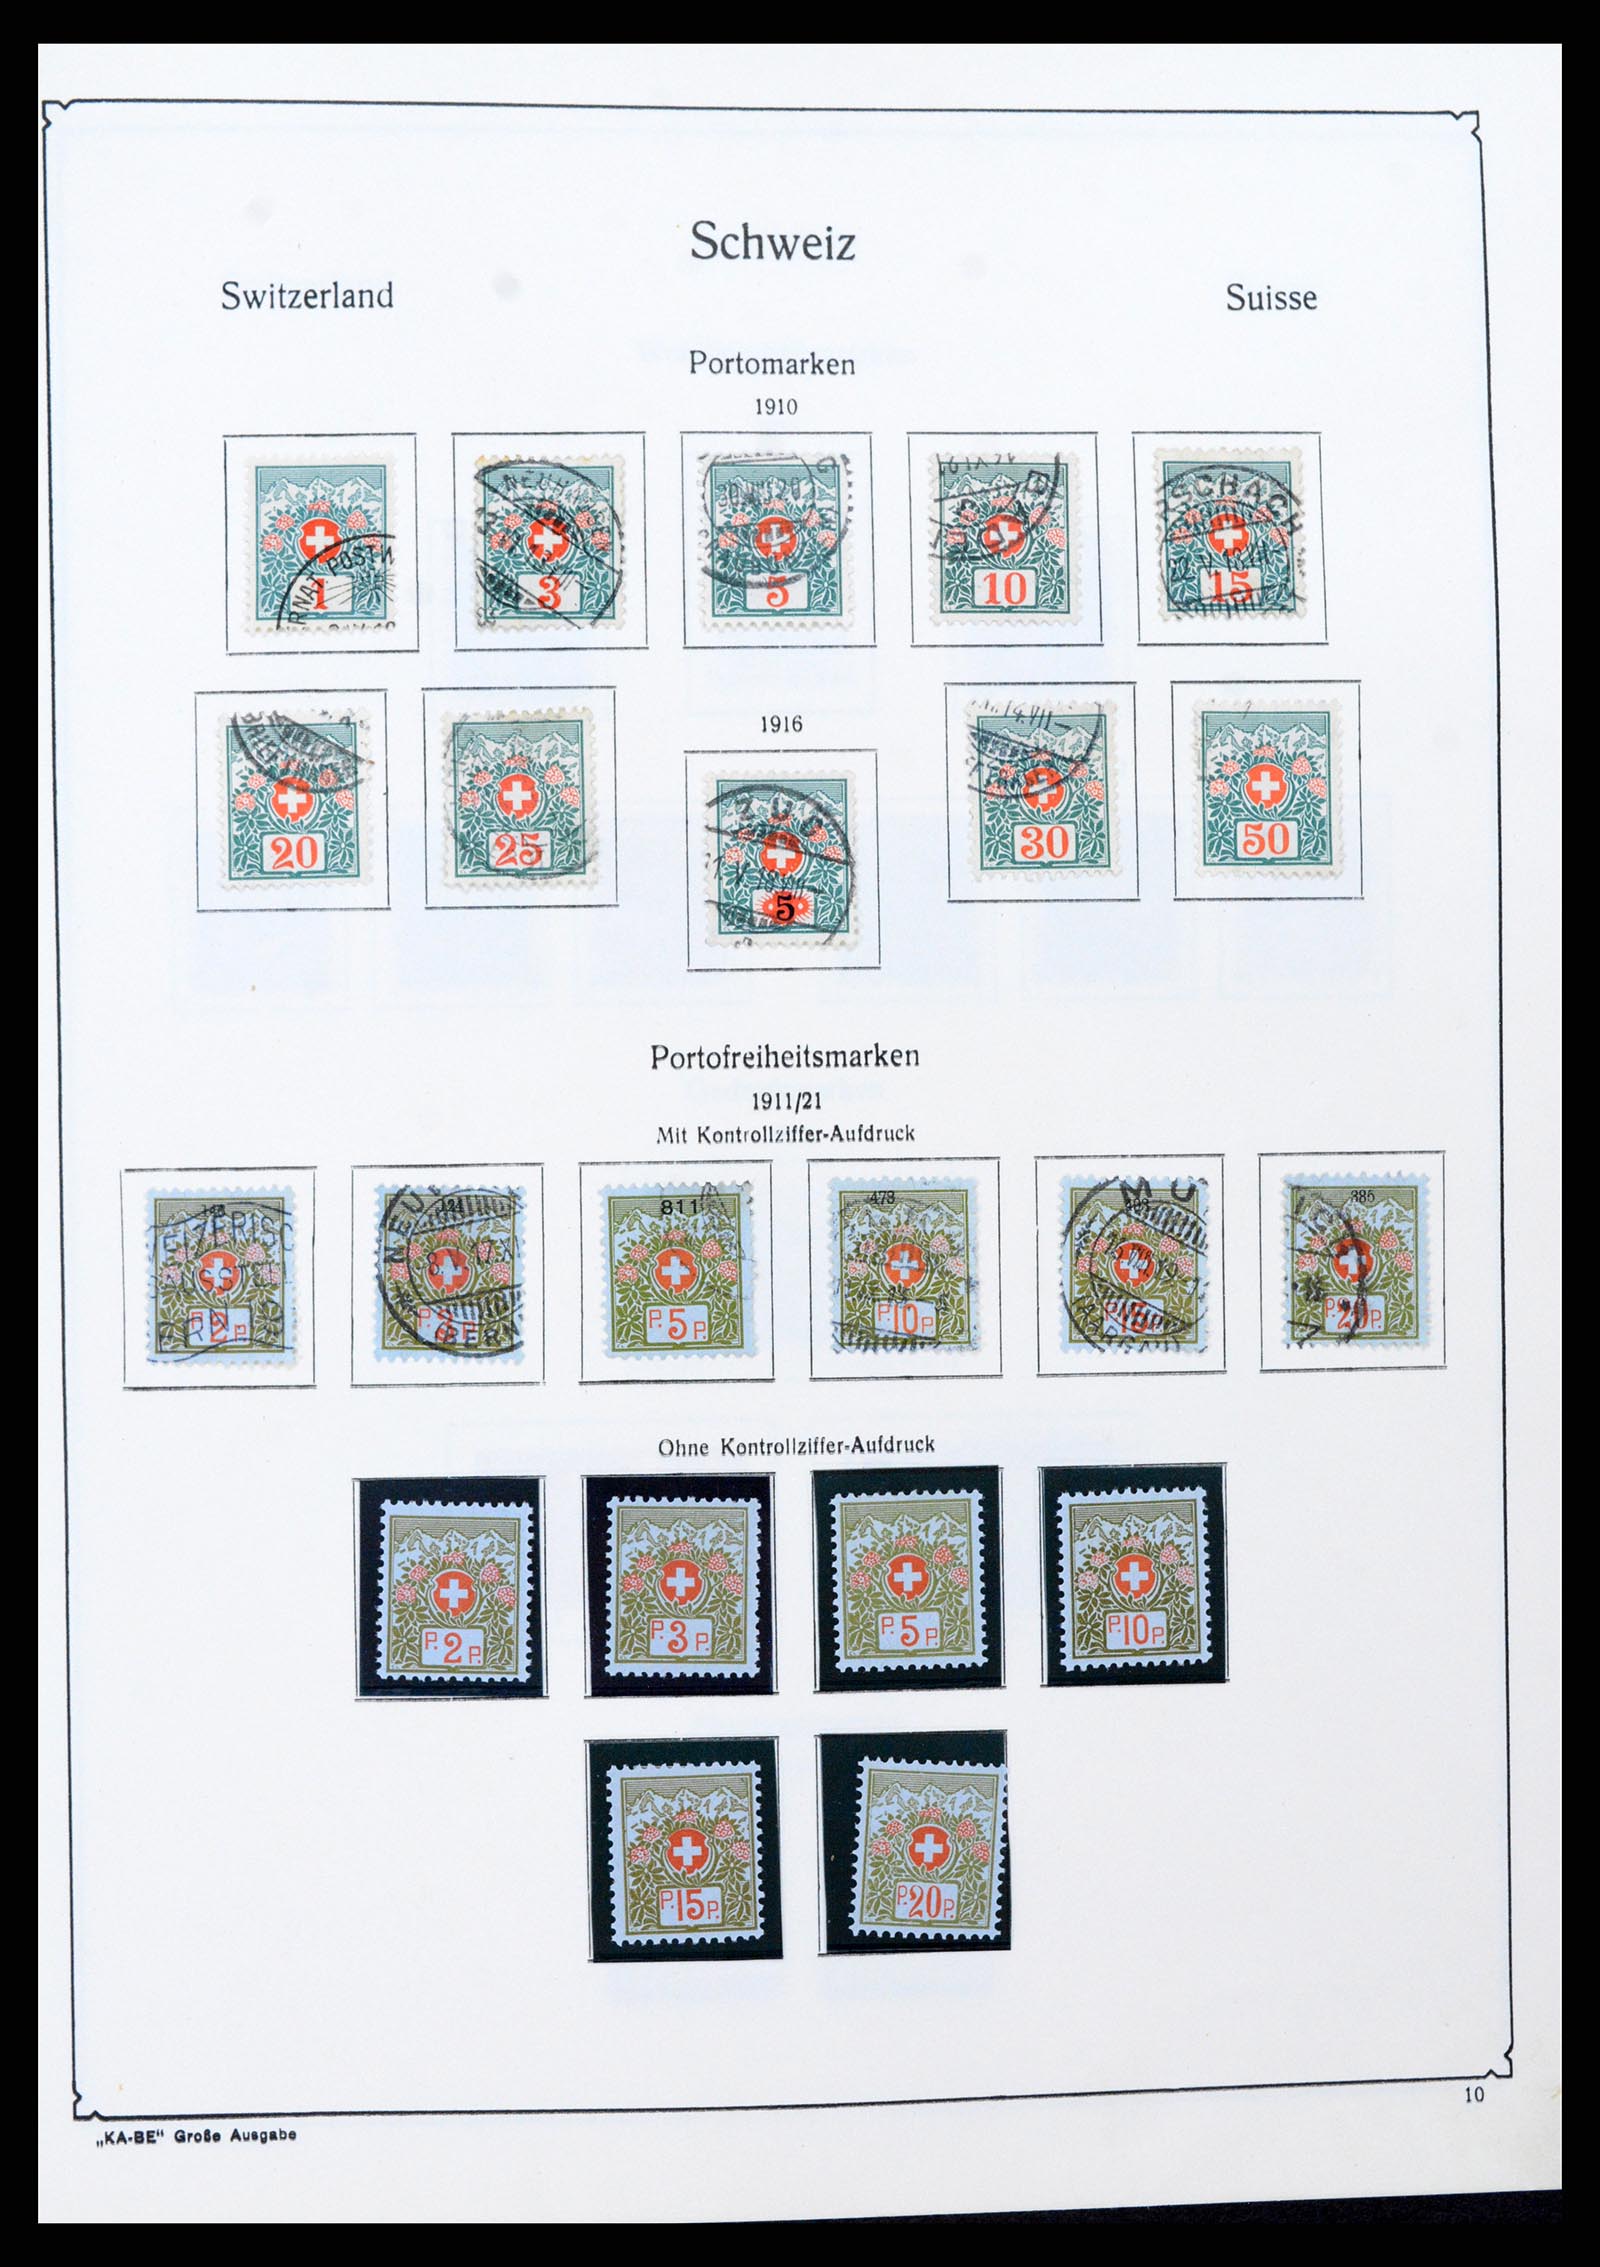 37588 009 - Stamp collection 37588 Switzerland 1854-1974.